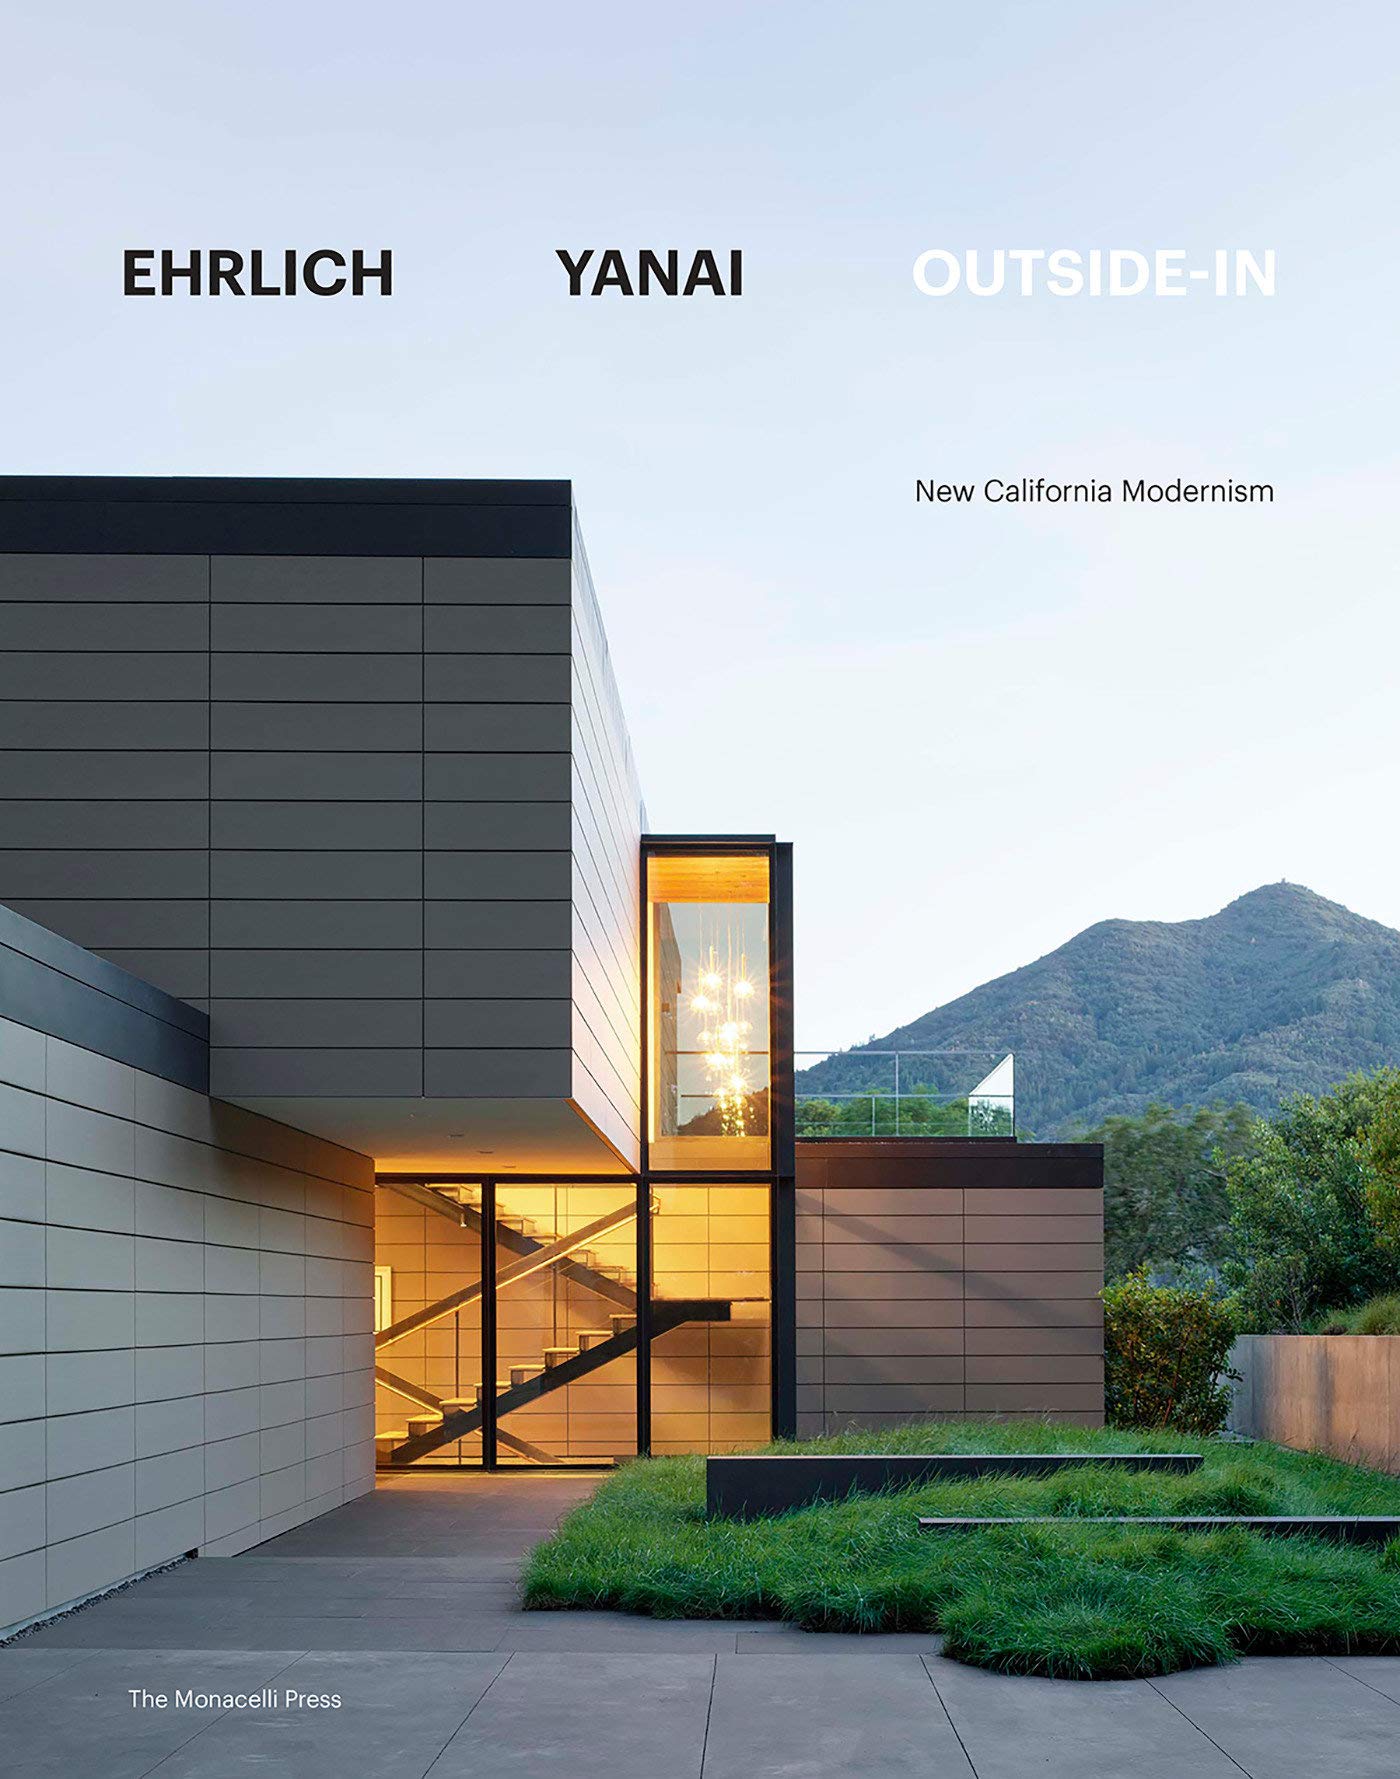 Ehrlich Yanai: New Calfornia Modernism